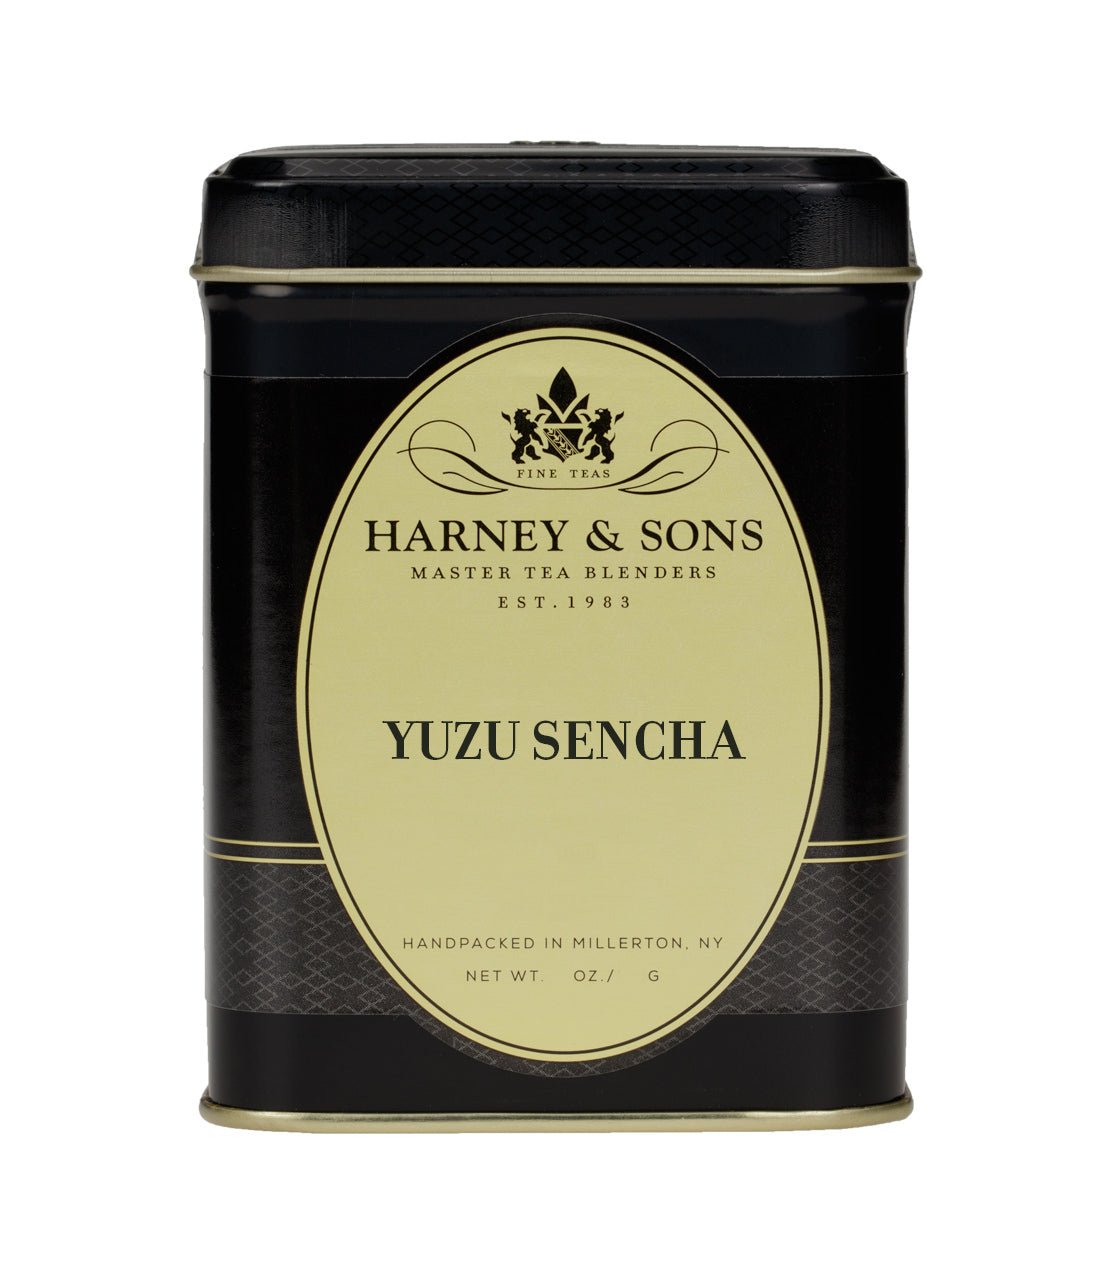 Yuzu Sencha - Loose 4 oz. Tin - Harney & Sons Fine Teas